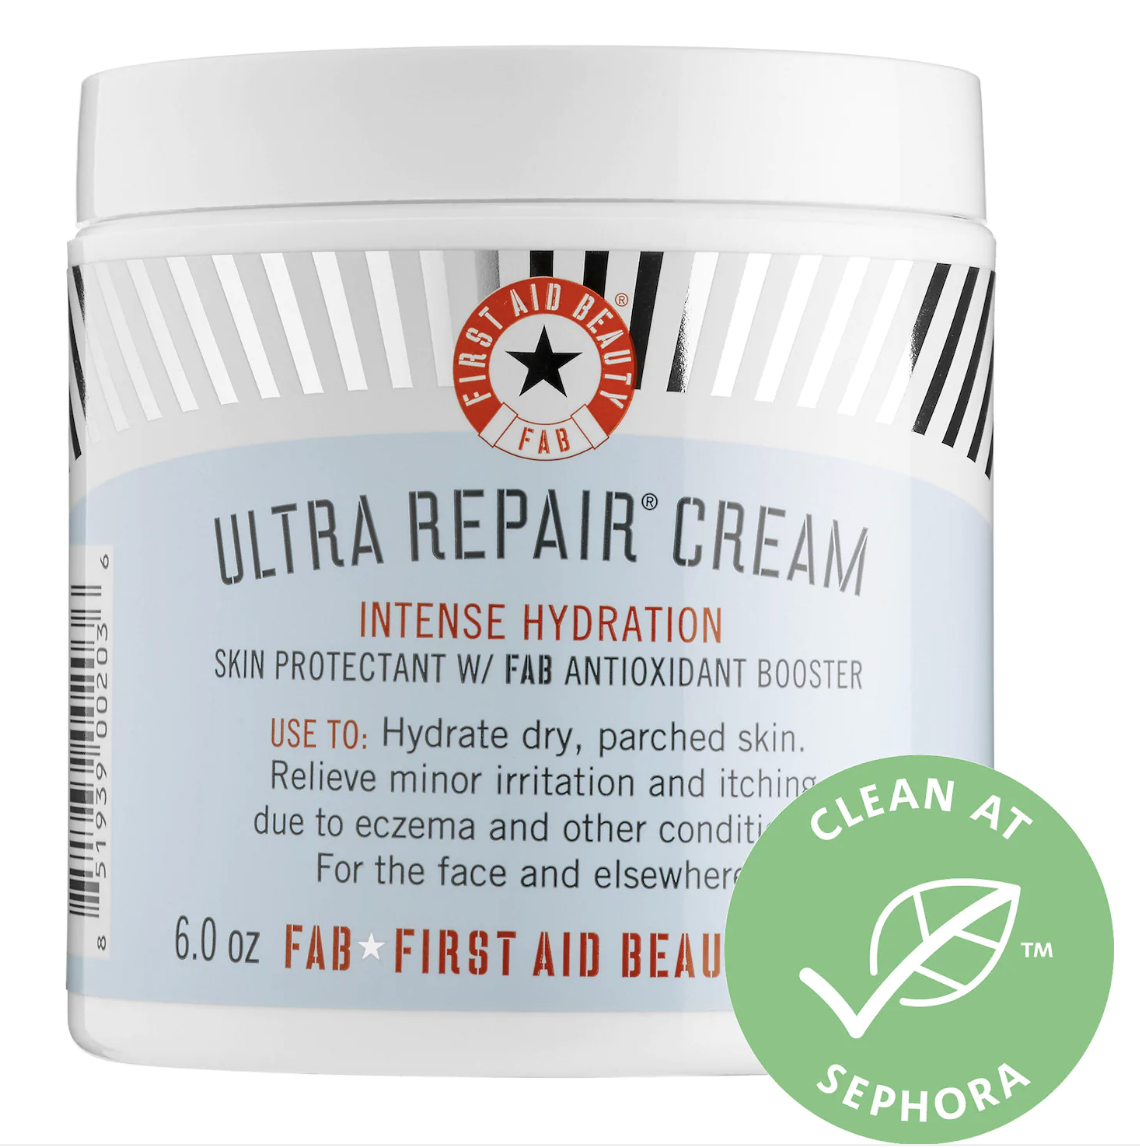 Ultra Repair Cream, $34